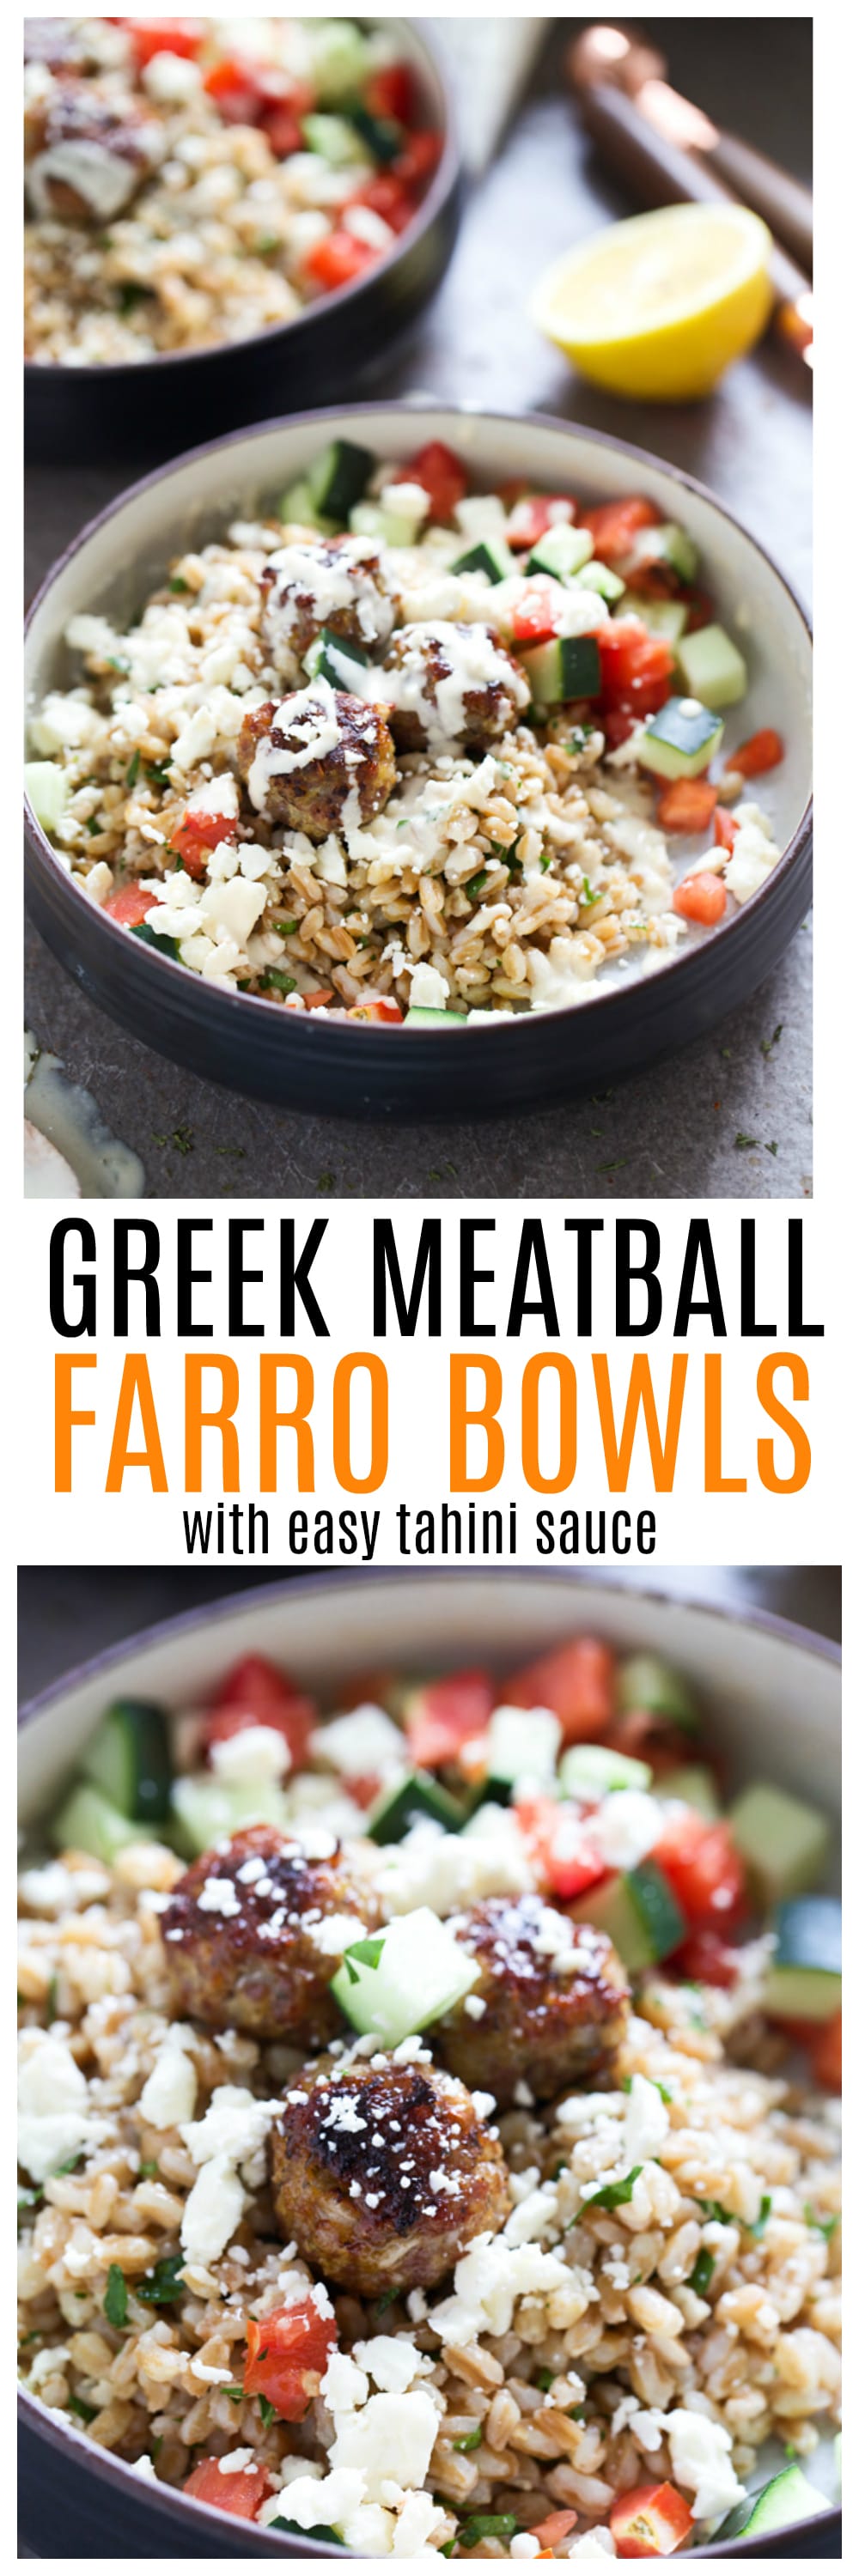 Greek Meatball Farro Bowls with Easy Tahini Sauce